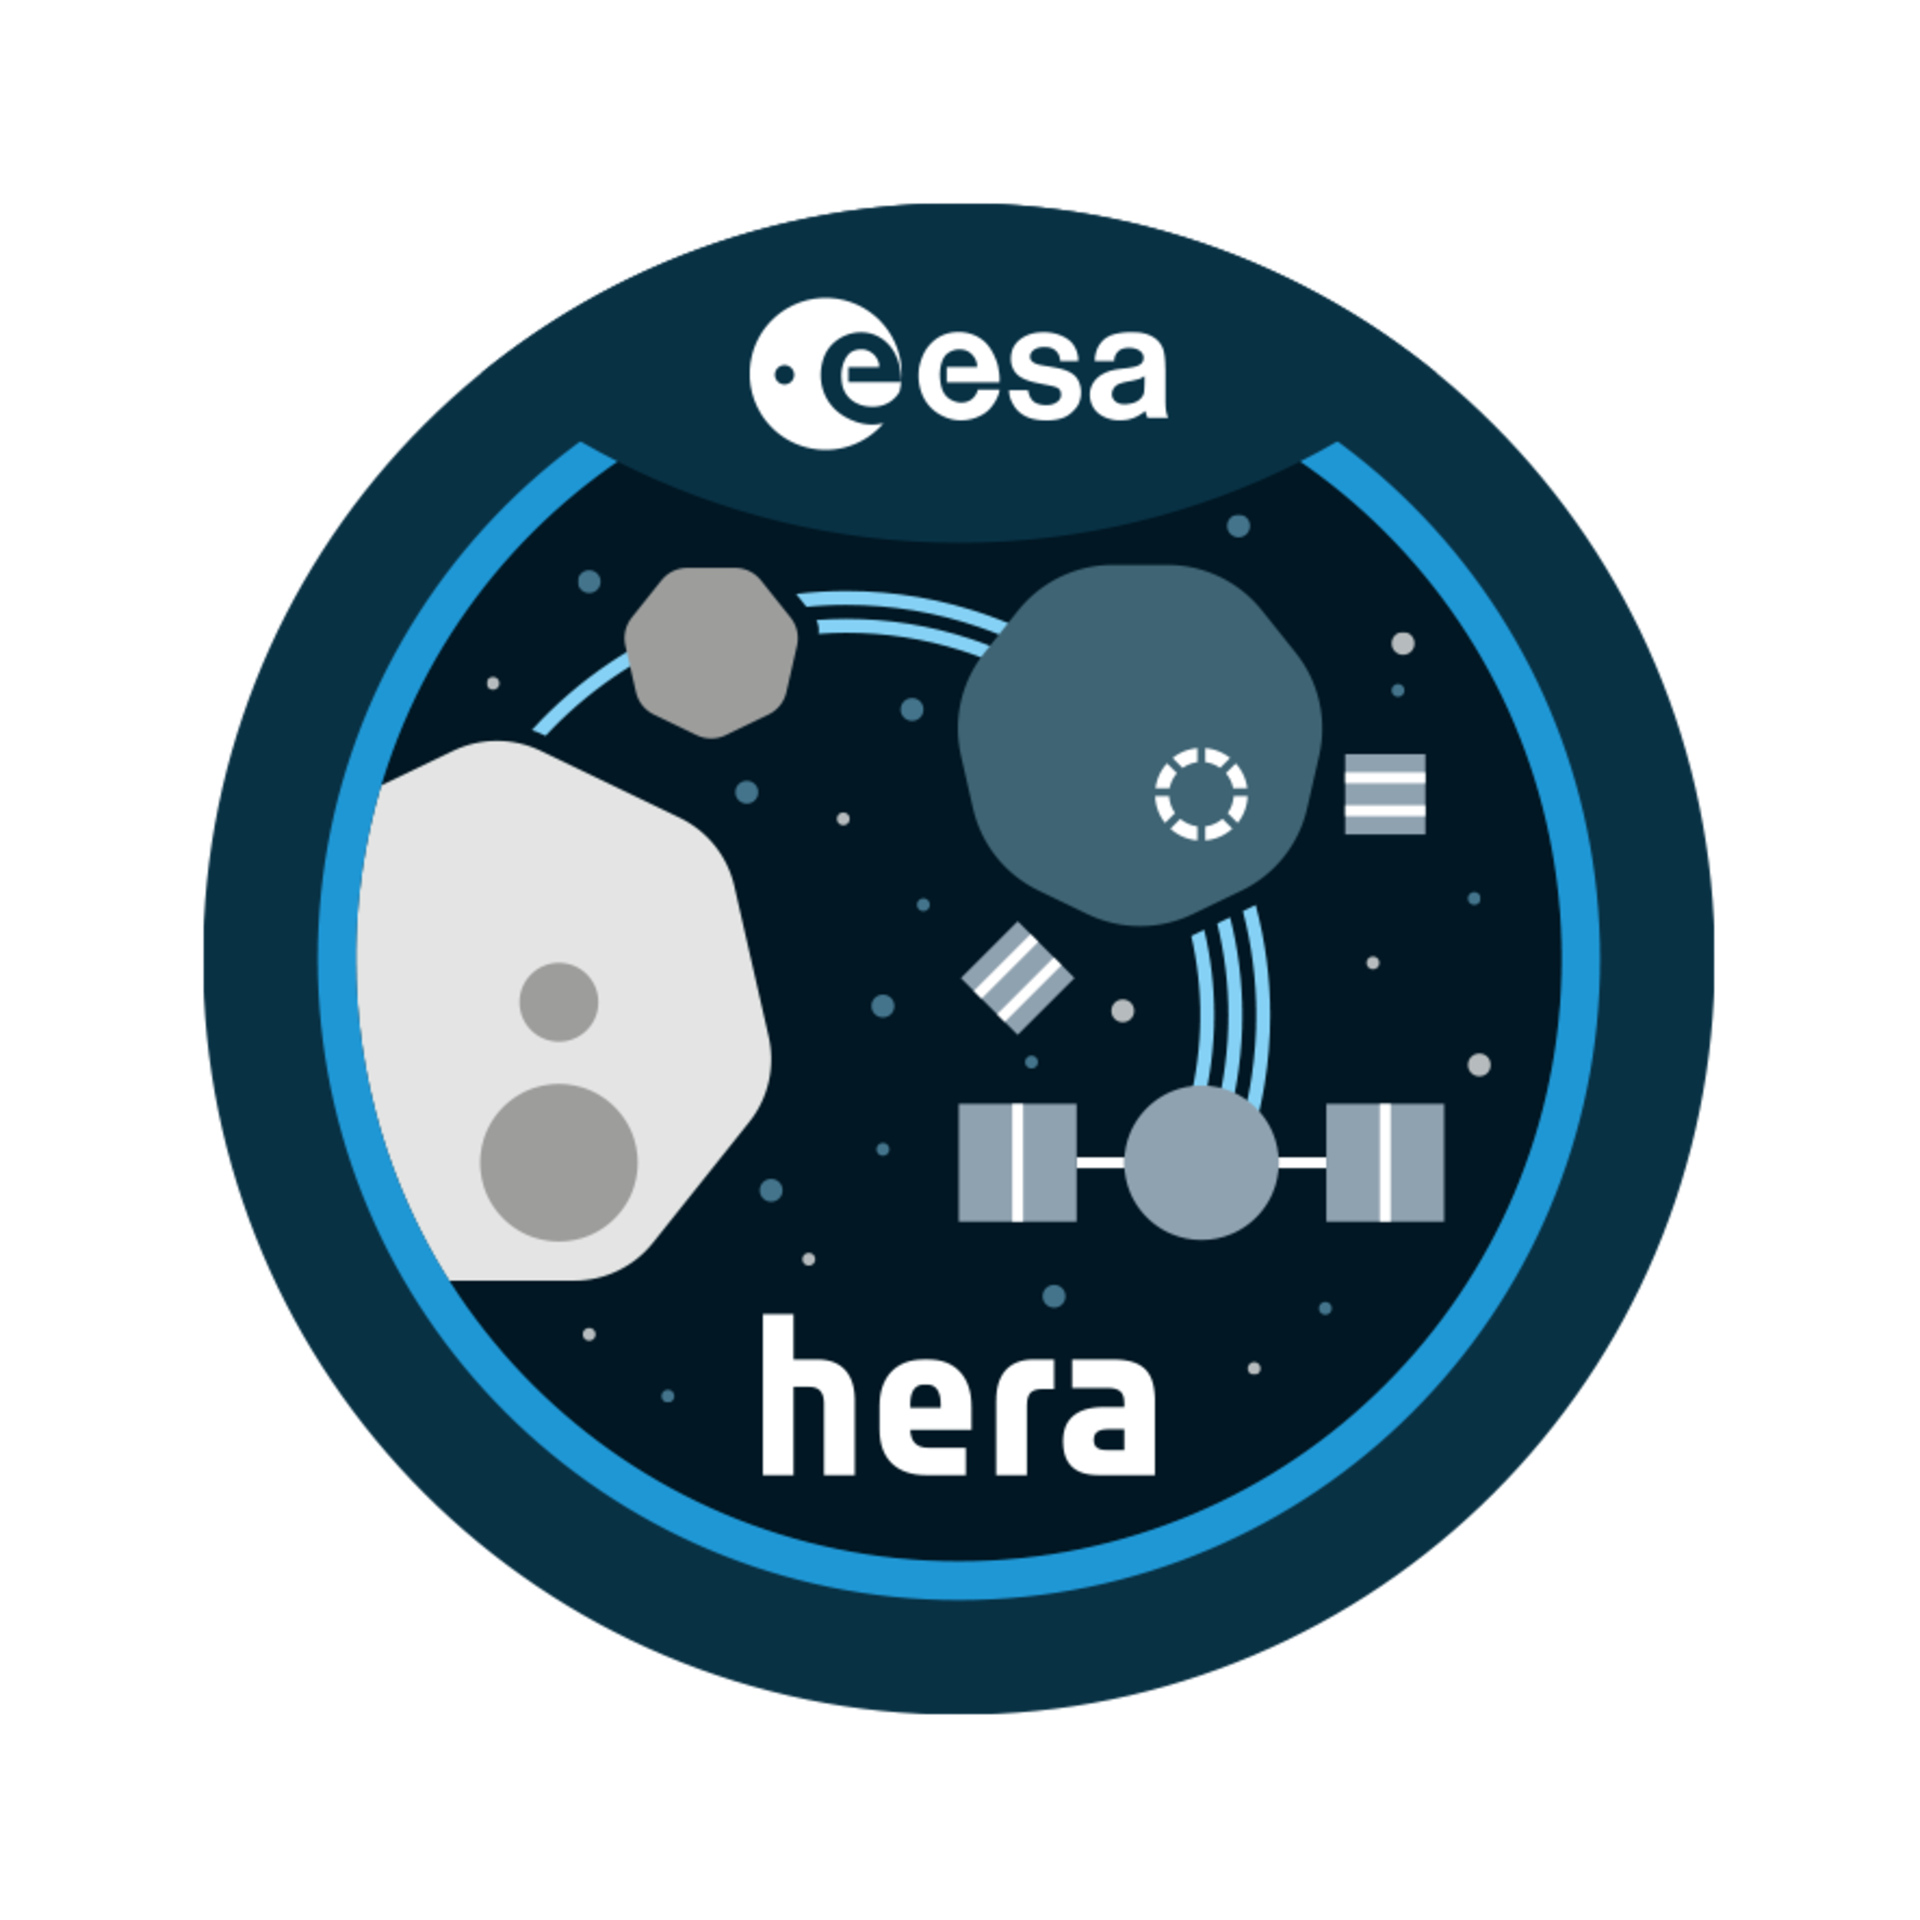 Hera mission patch